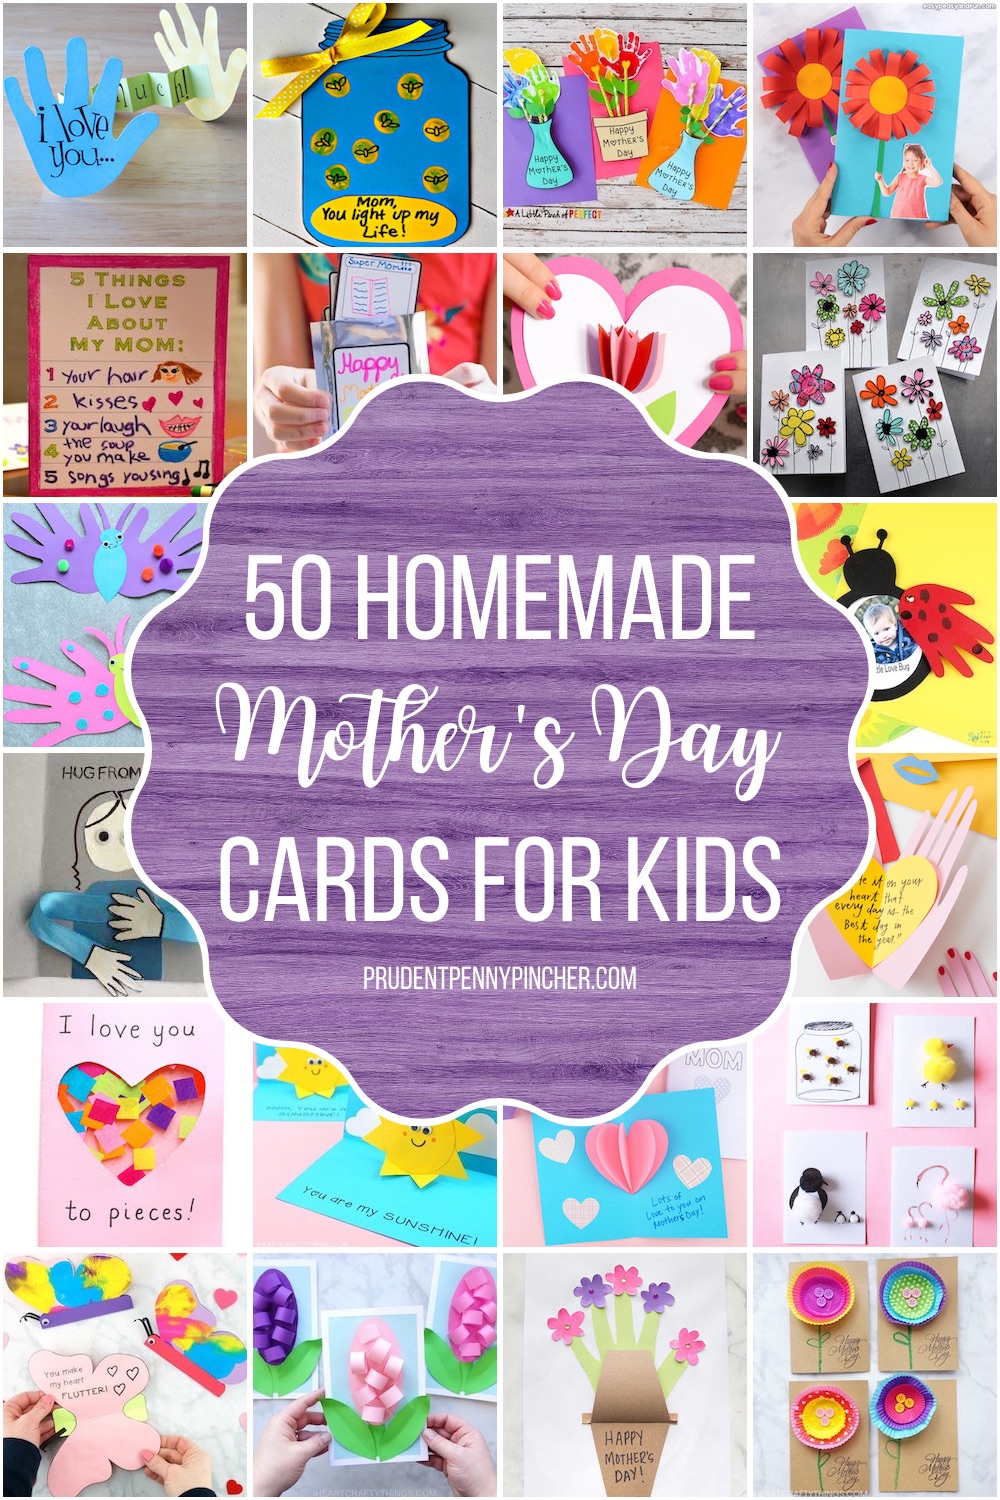 https://www.prudentpennypincher.com/wp-content/uploads/2020/04/mothers-day-cards-for-kids.jpg